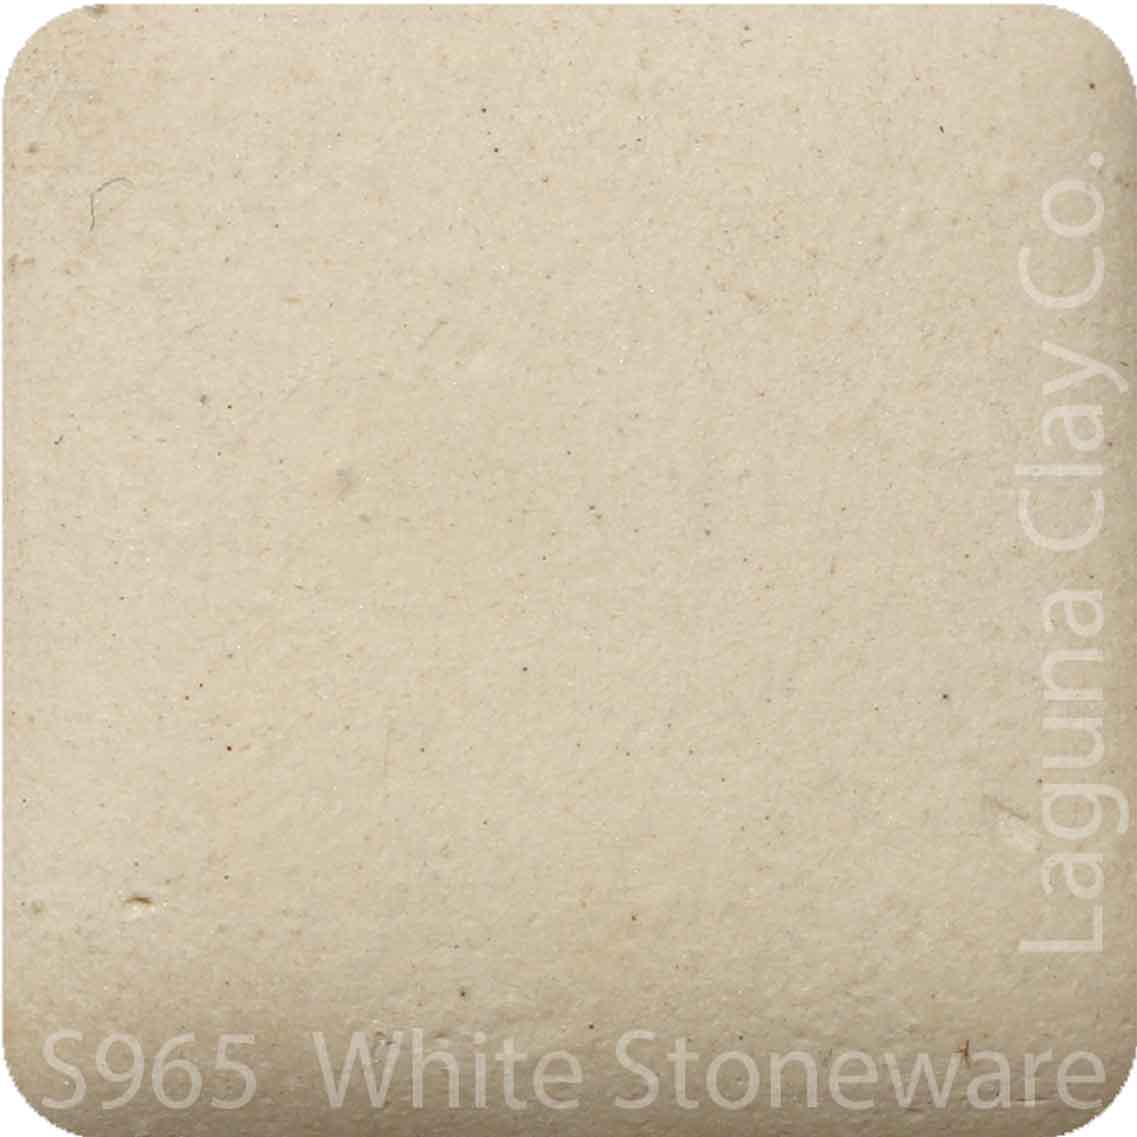 S965 White Stoneware Laguna Casting Clay